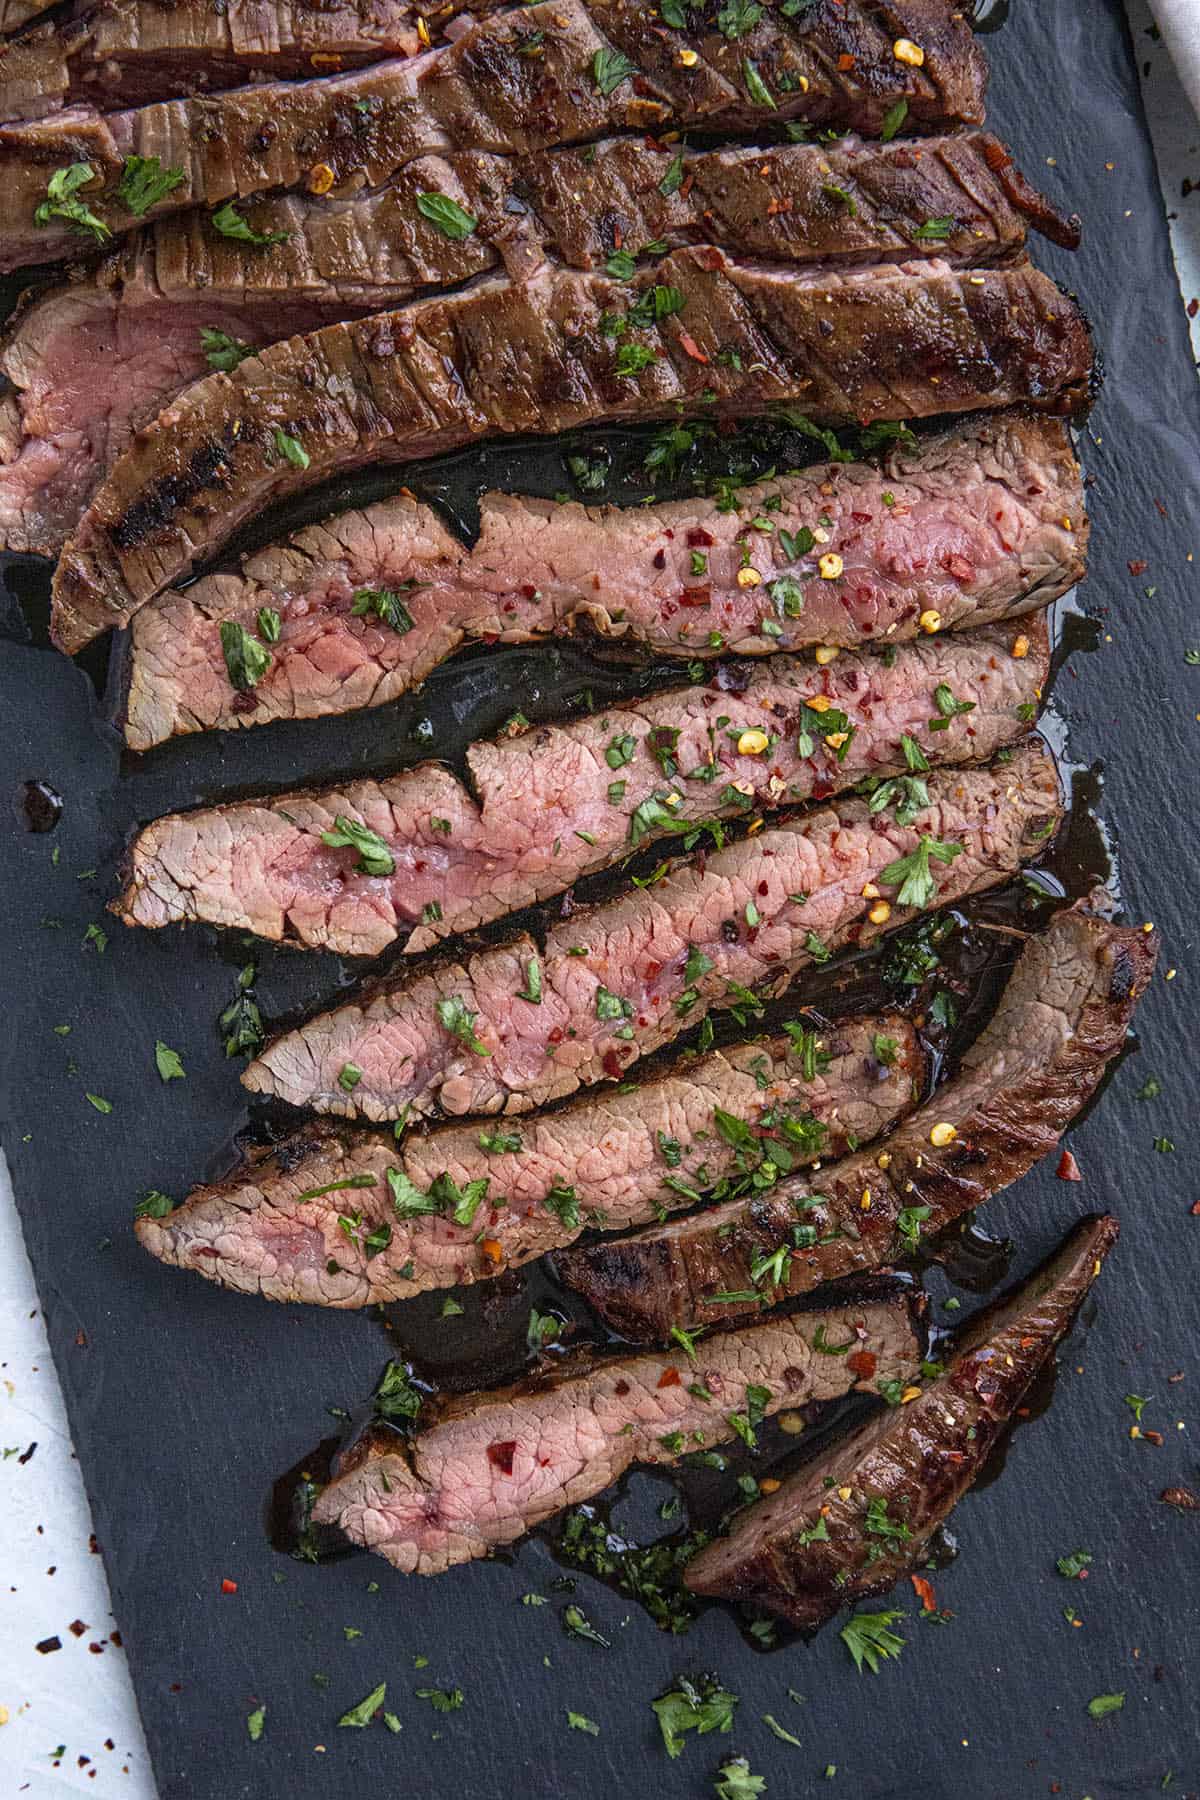 Sliced marinated flank steak ready to serve